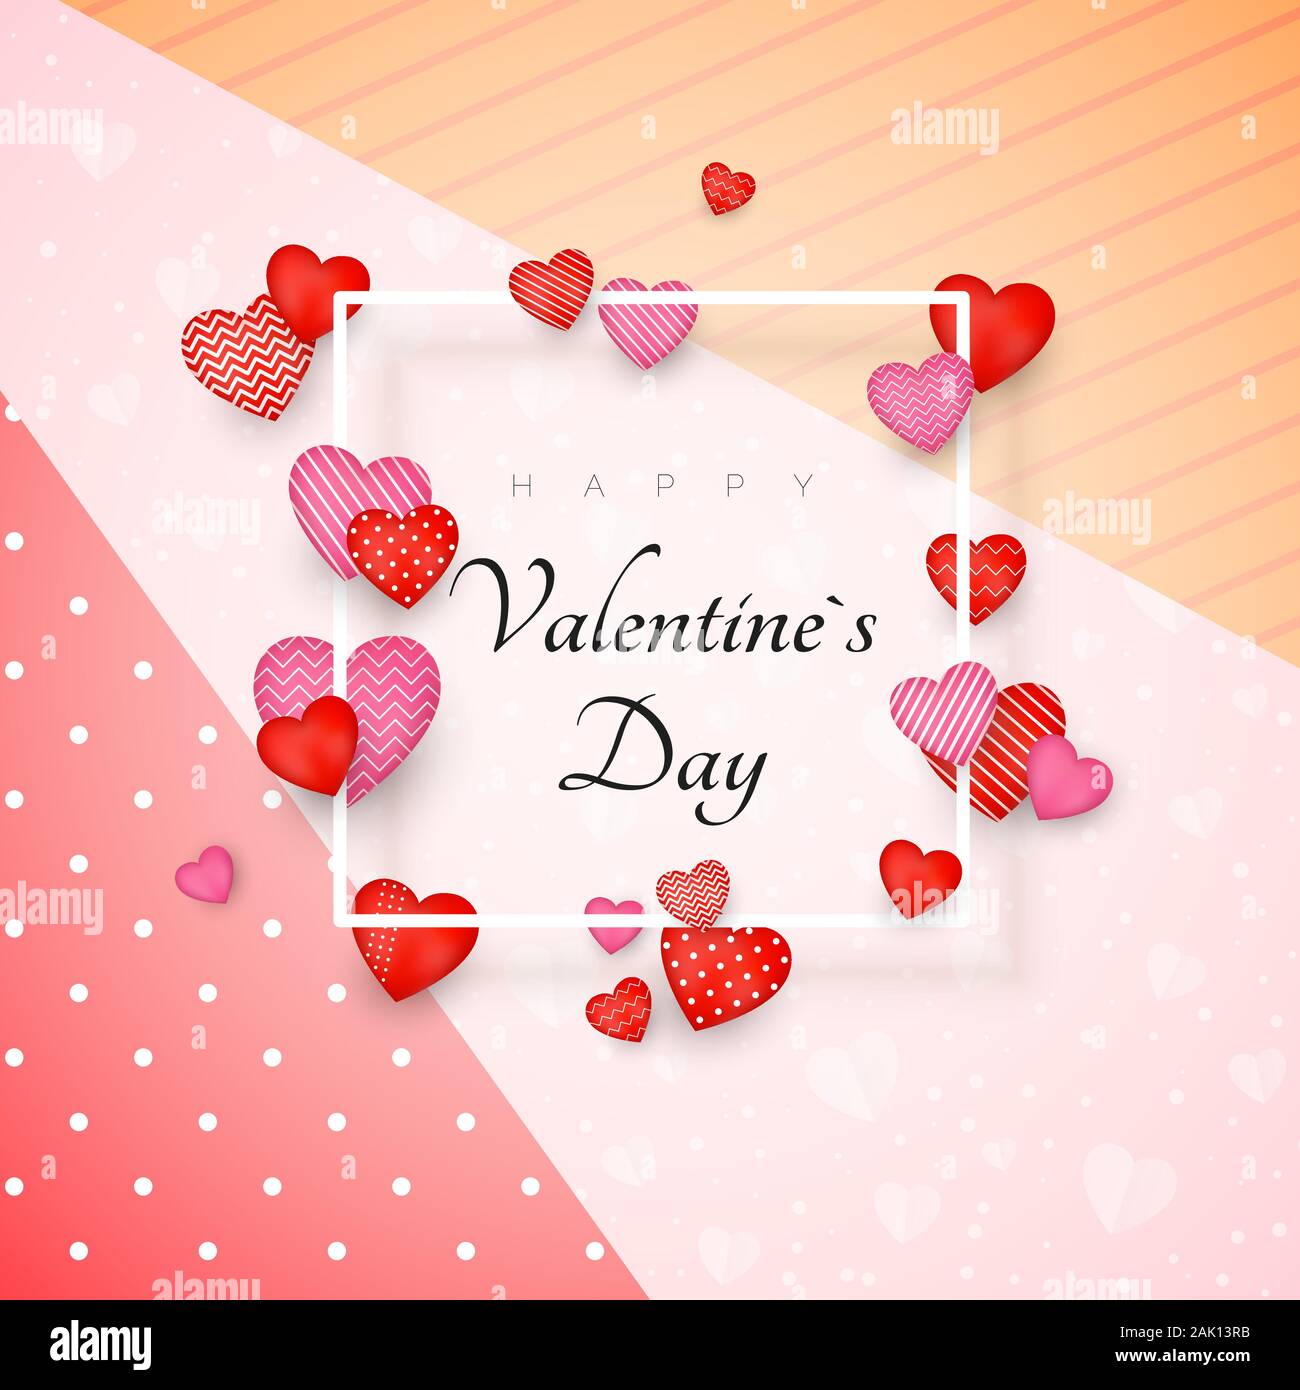 13 Valentine's Day aesthetics ideas  valentine, valentines, happy valentine